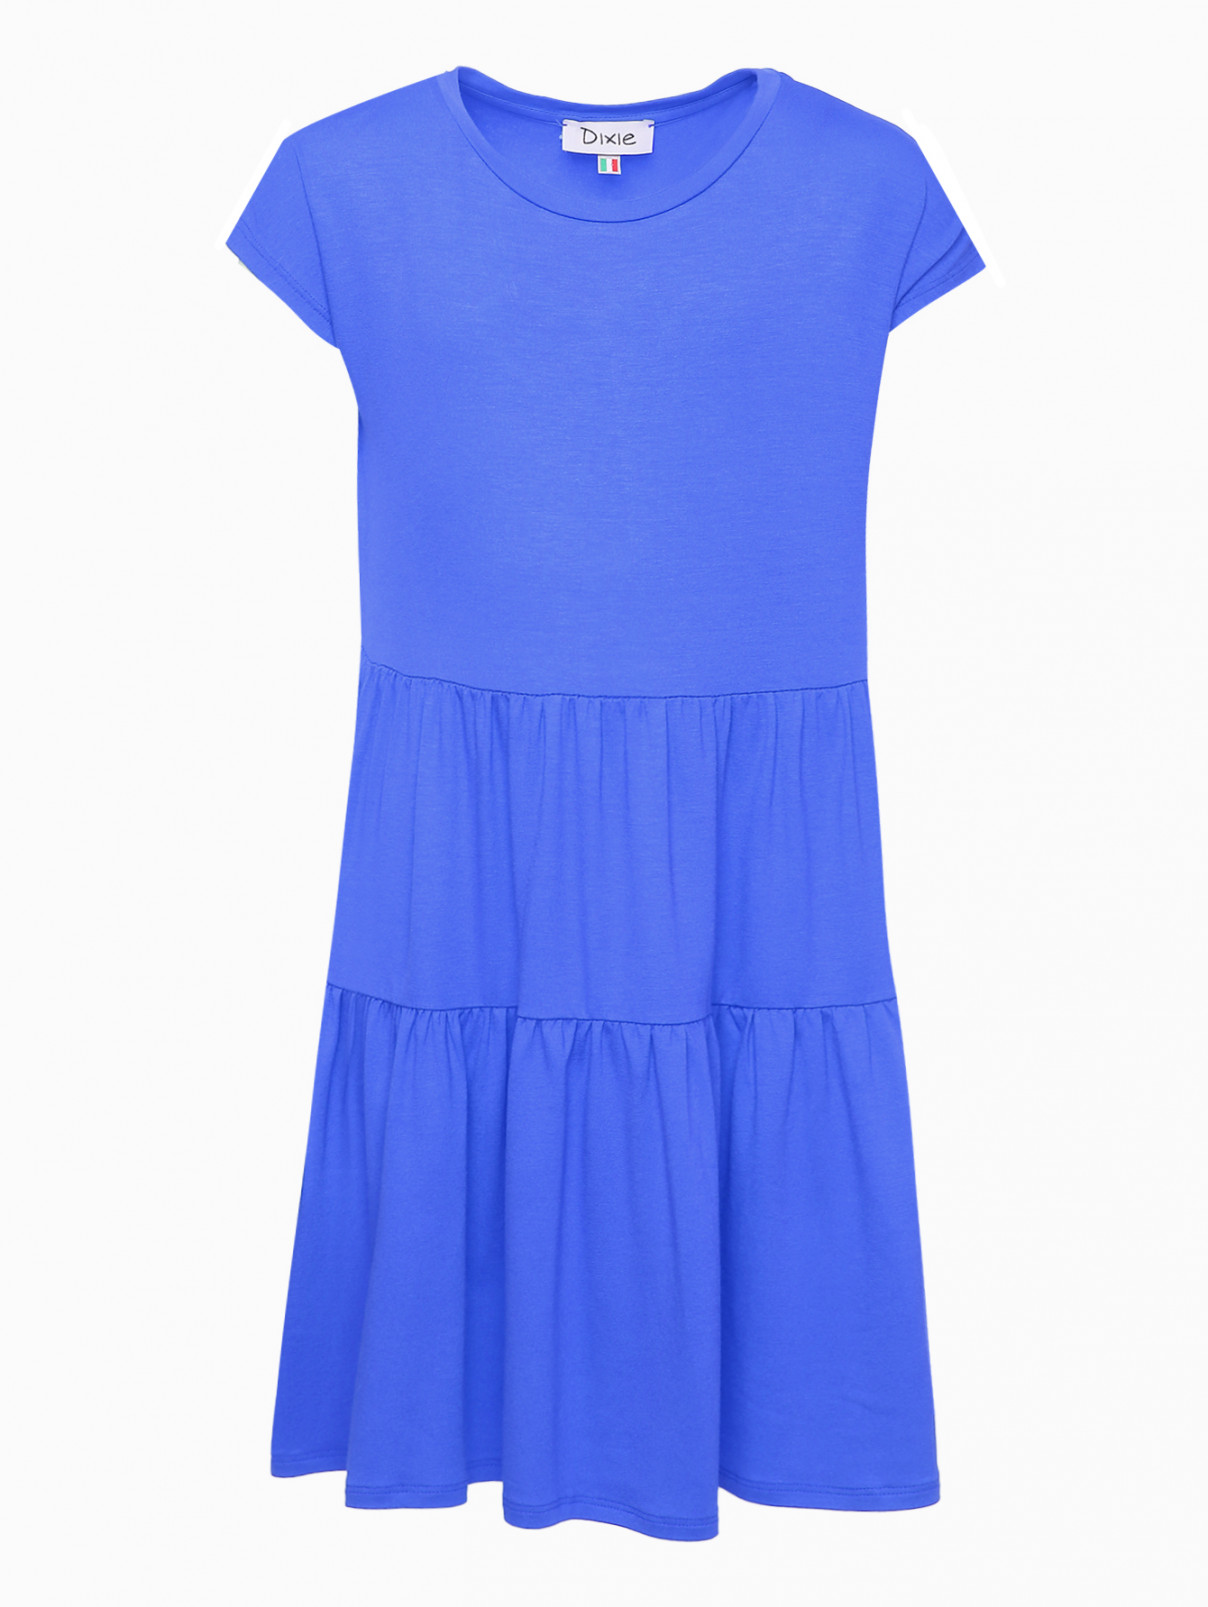 Однотонное платье из трикотажа DIXIE  –  Общий вид  – Цвет:  Синий